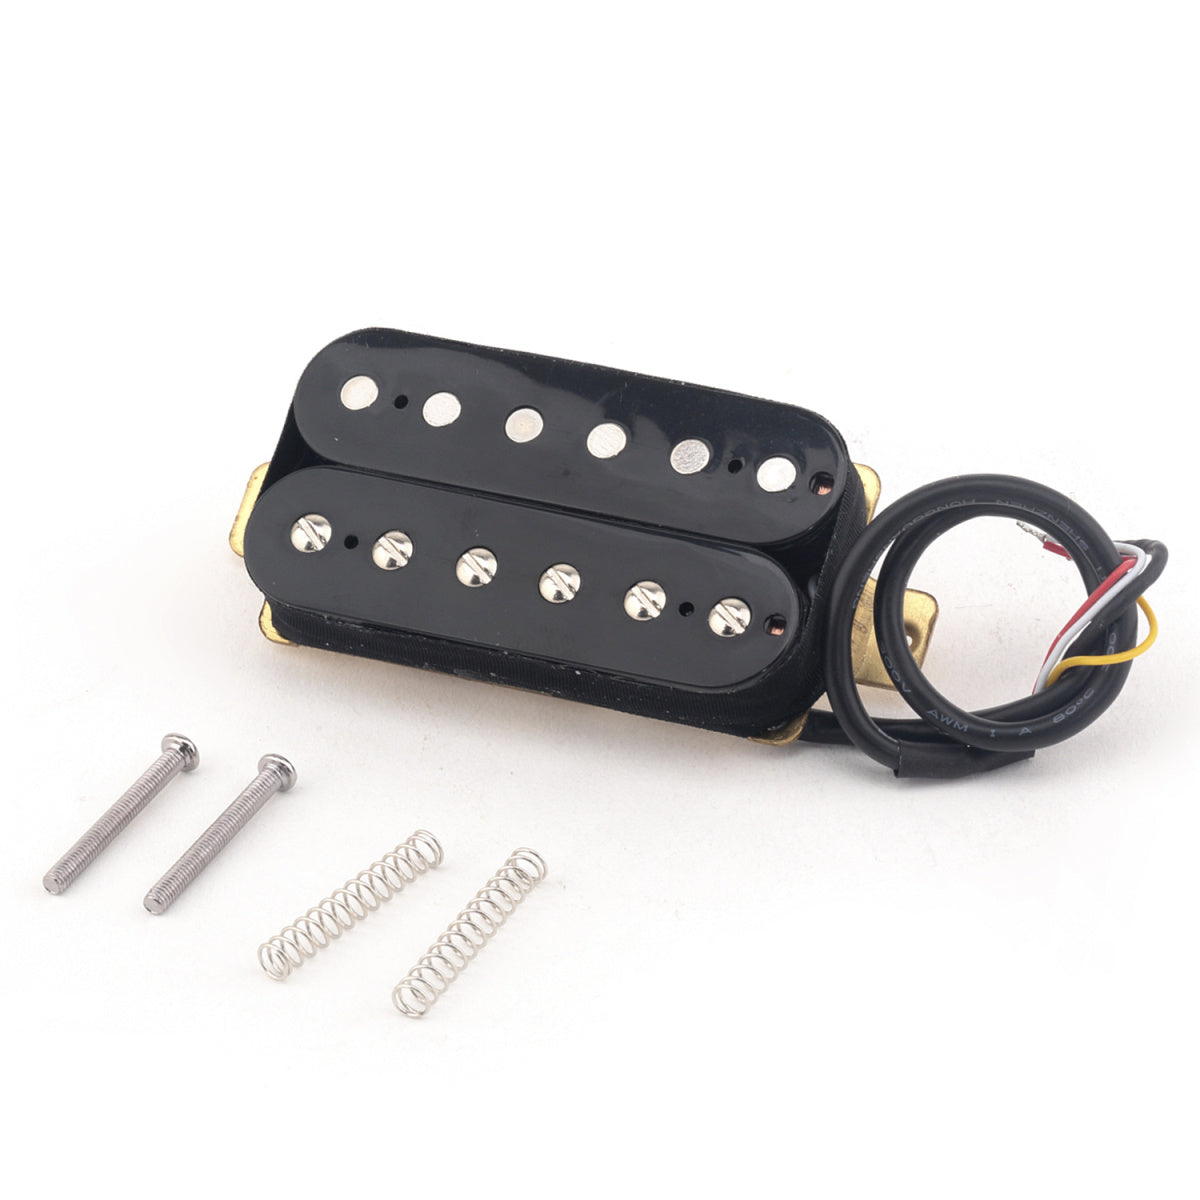 Musiclily Pro 52mm Alnico 5 Humbucker Pickup for Electric Guitar Bridge, Black